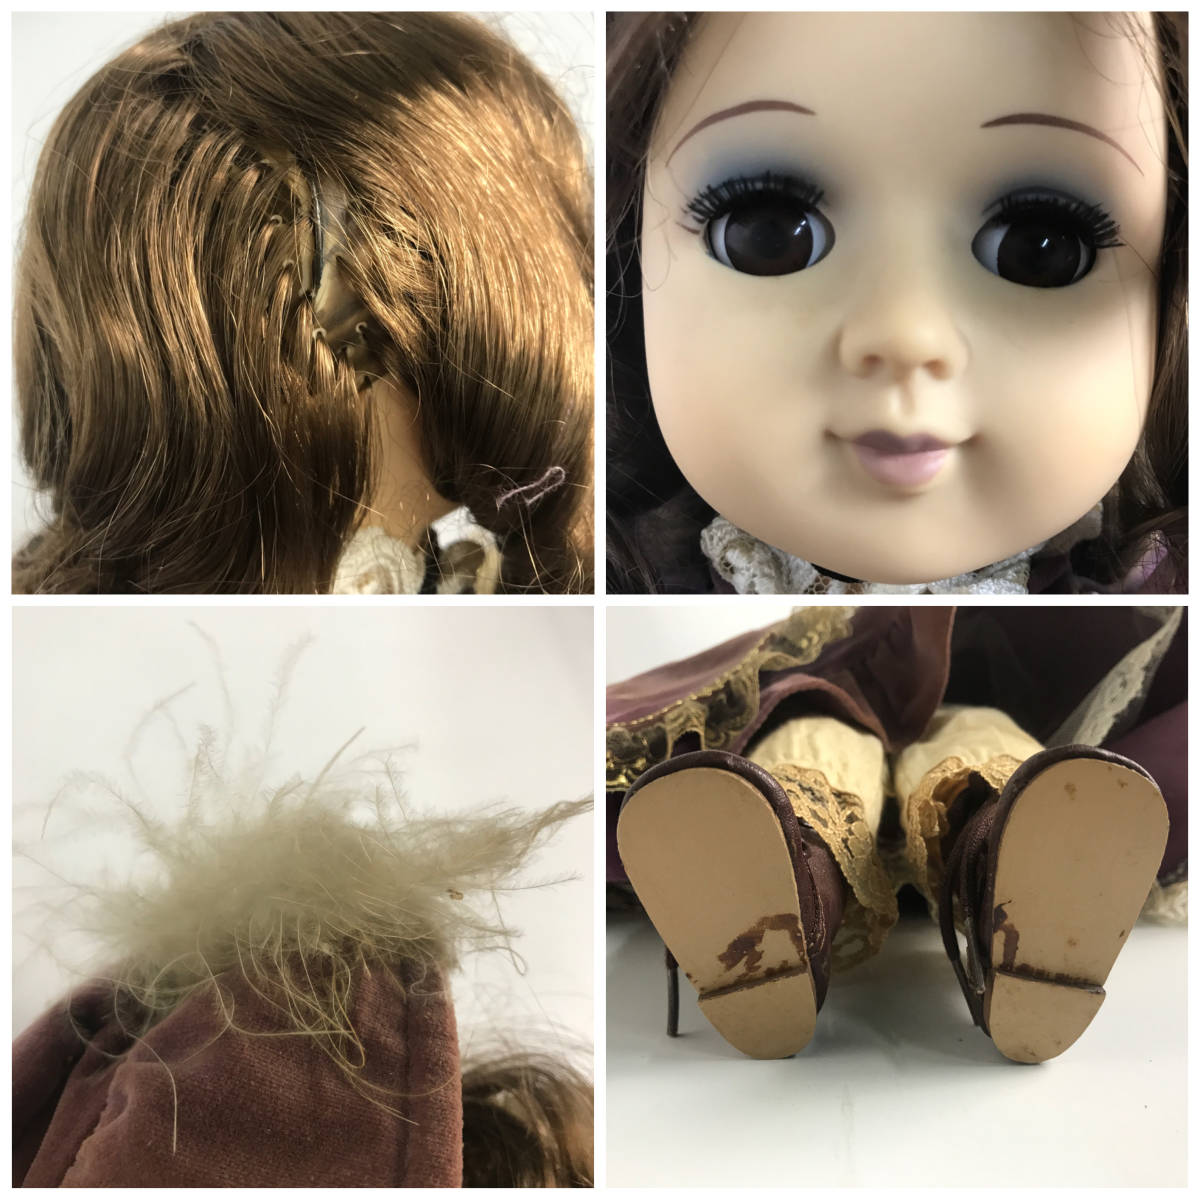 ba8/25 Oike collection スリープアイ 人形 約47cm 抱き人形 ベロア帽子 ドレス ワンピース オオイケ コレクション  眠り人形 ドール